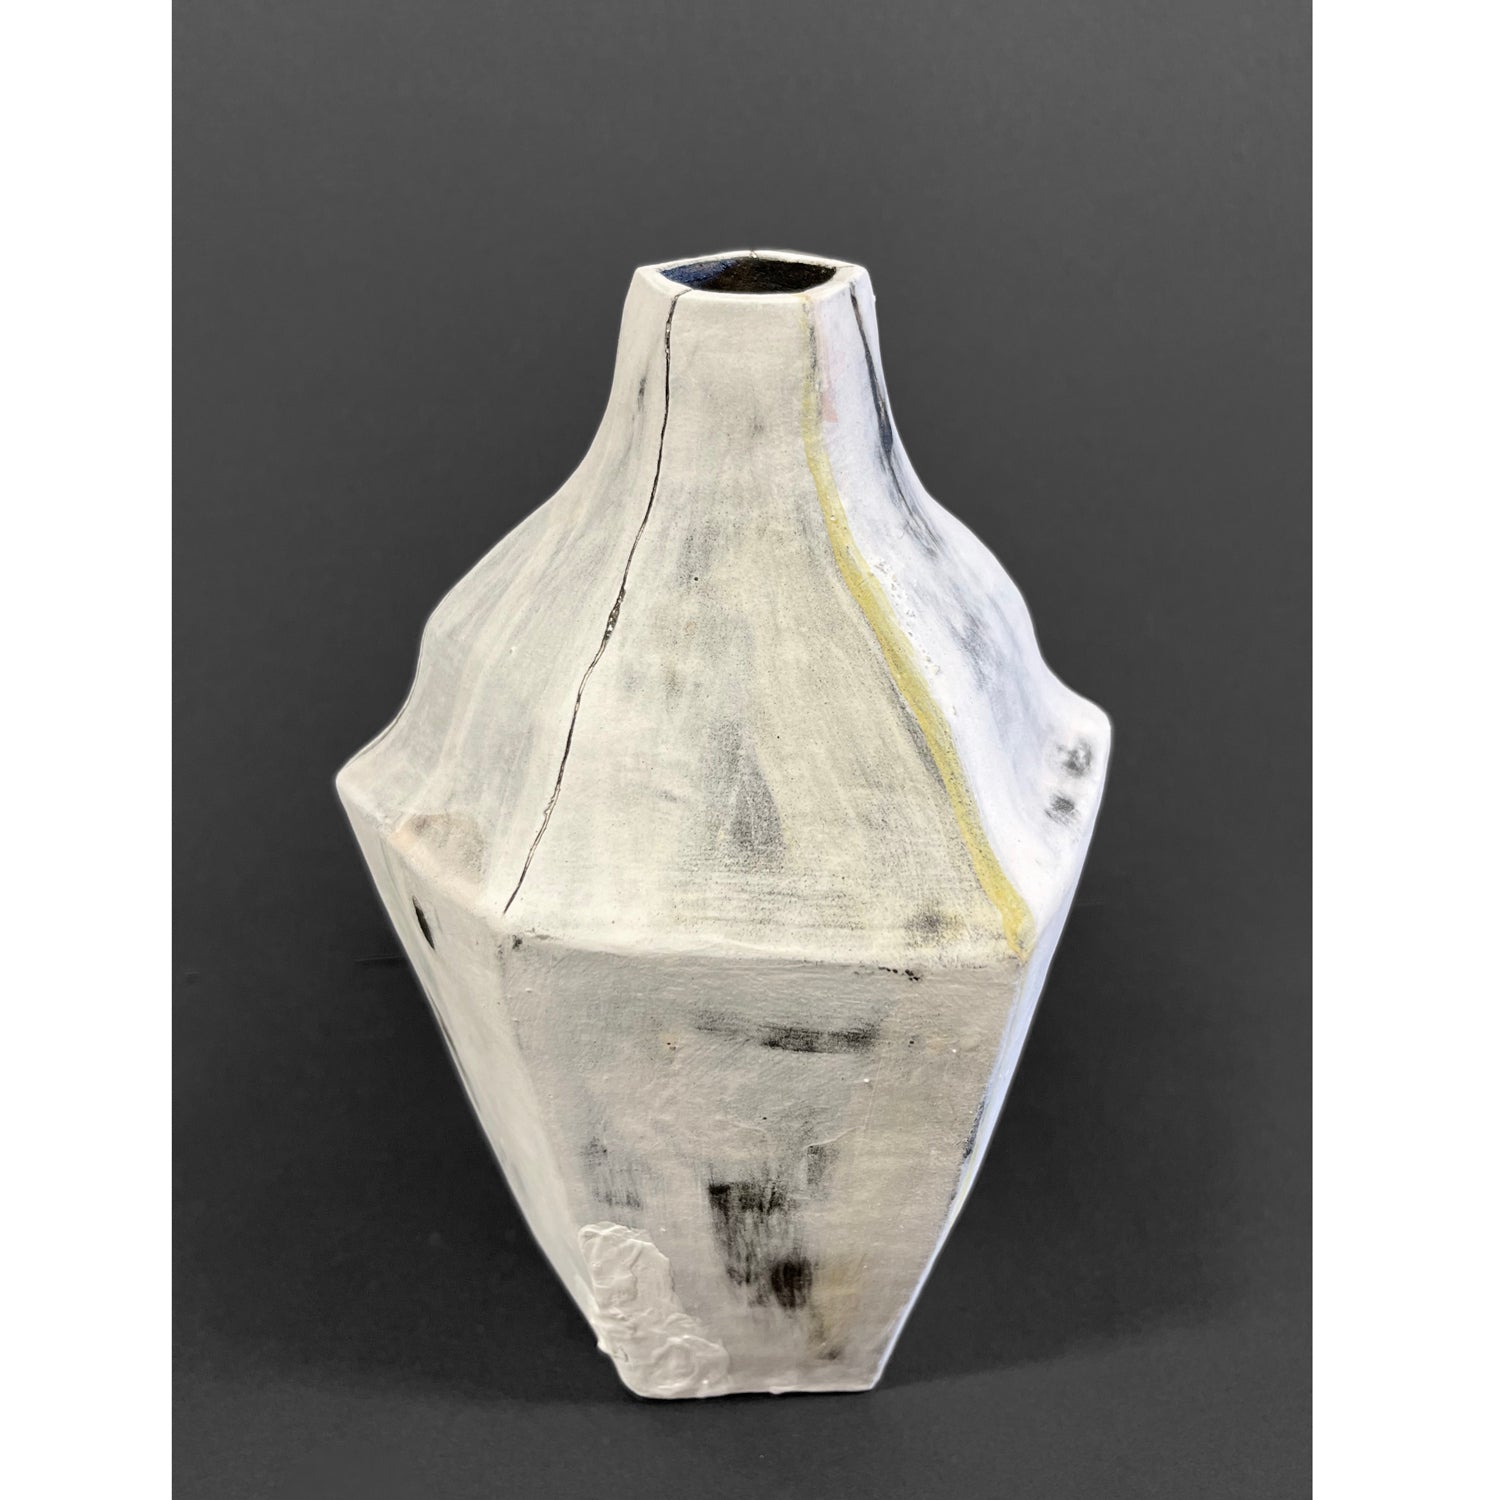 Mariana Bolanos Inclan - Small White Vase